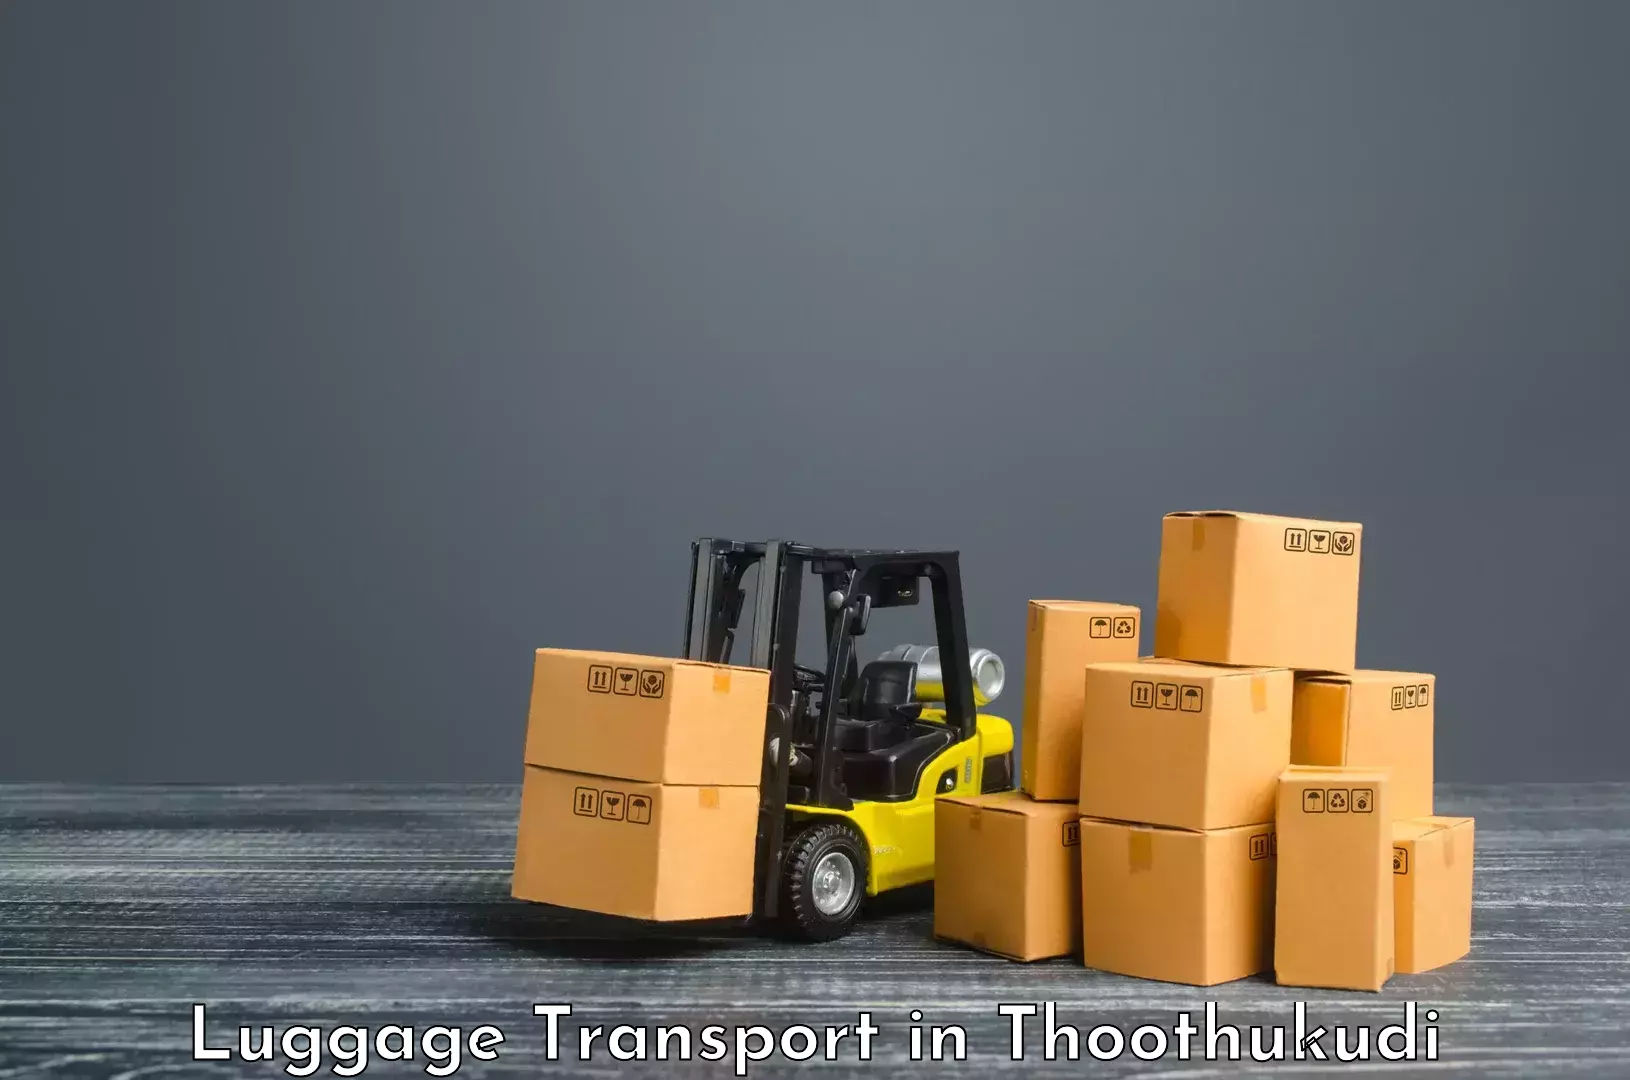 Luggage shipment specialists in Thoothukudi